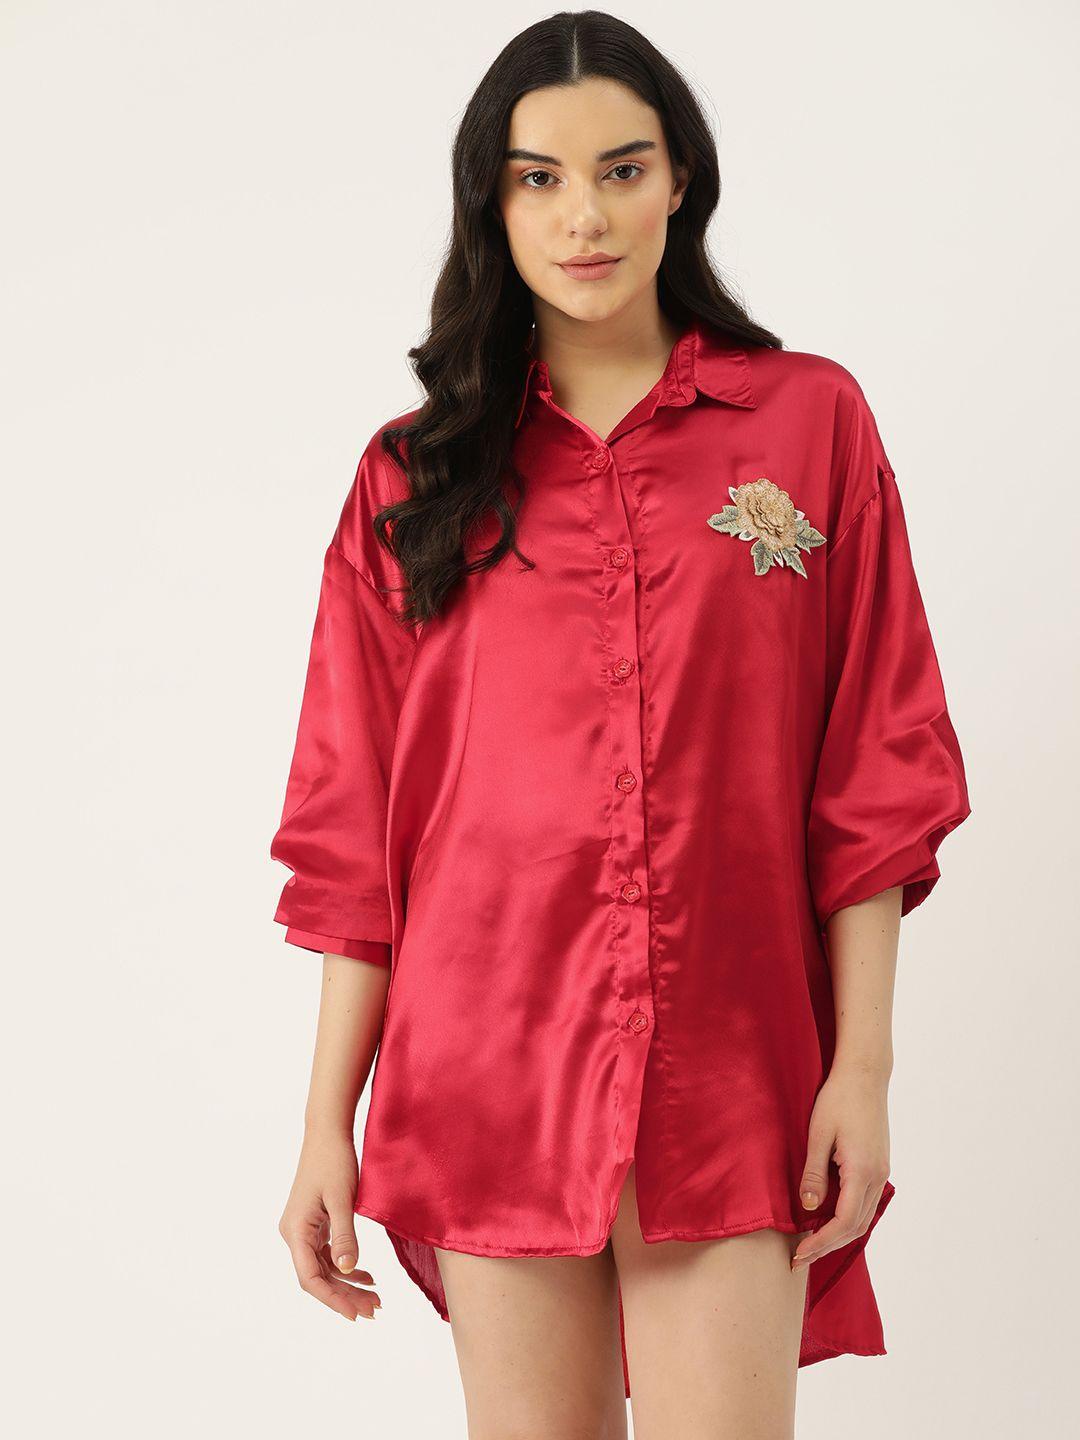 ms.lingies embroidered shirt nightdress